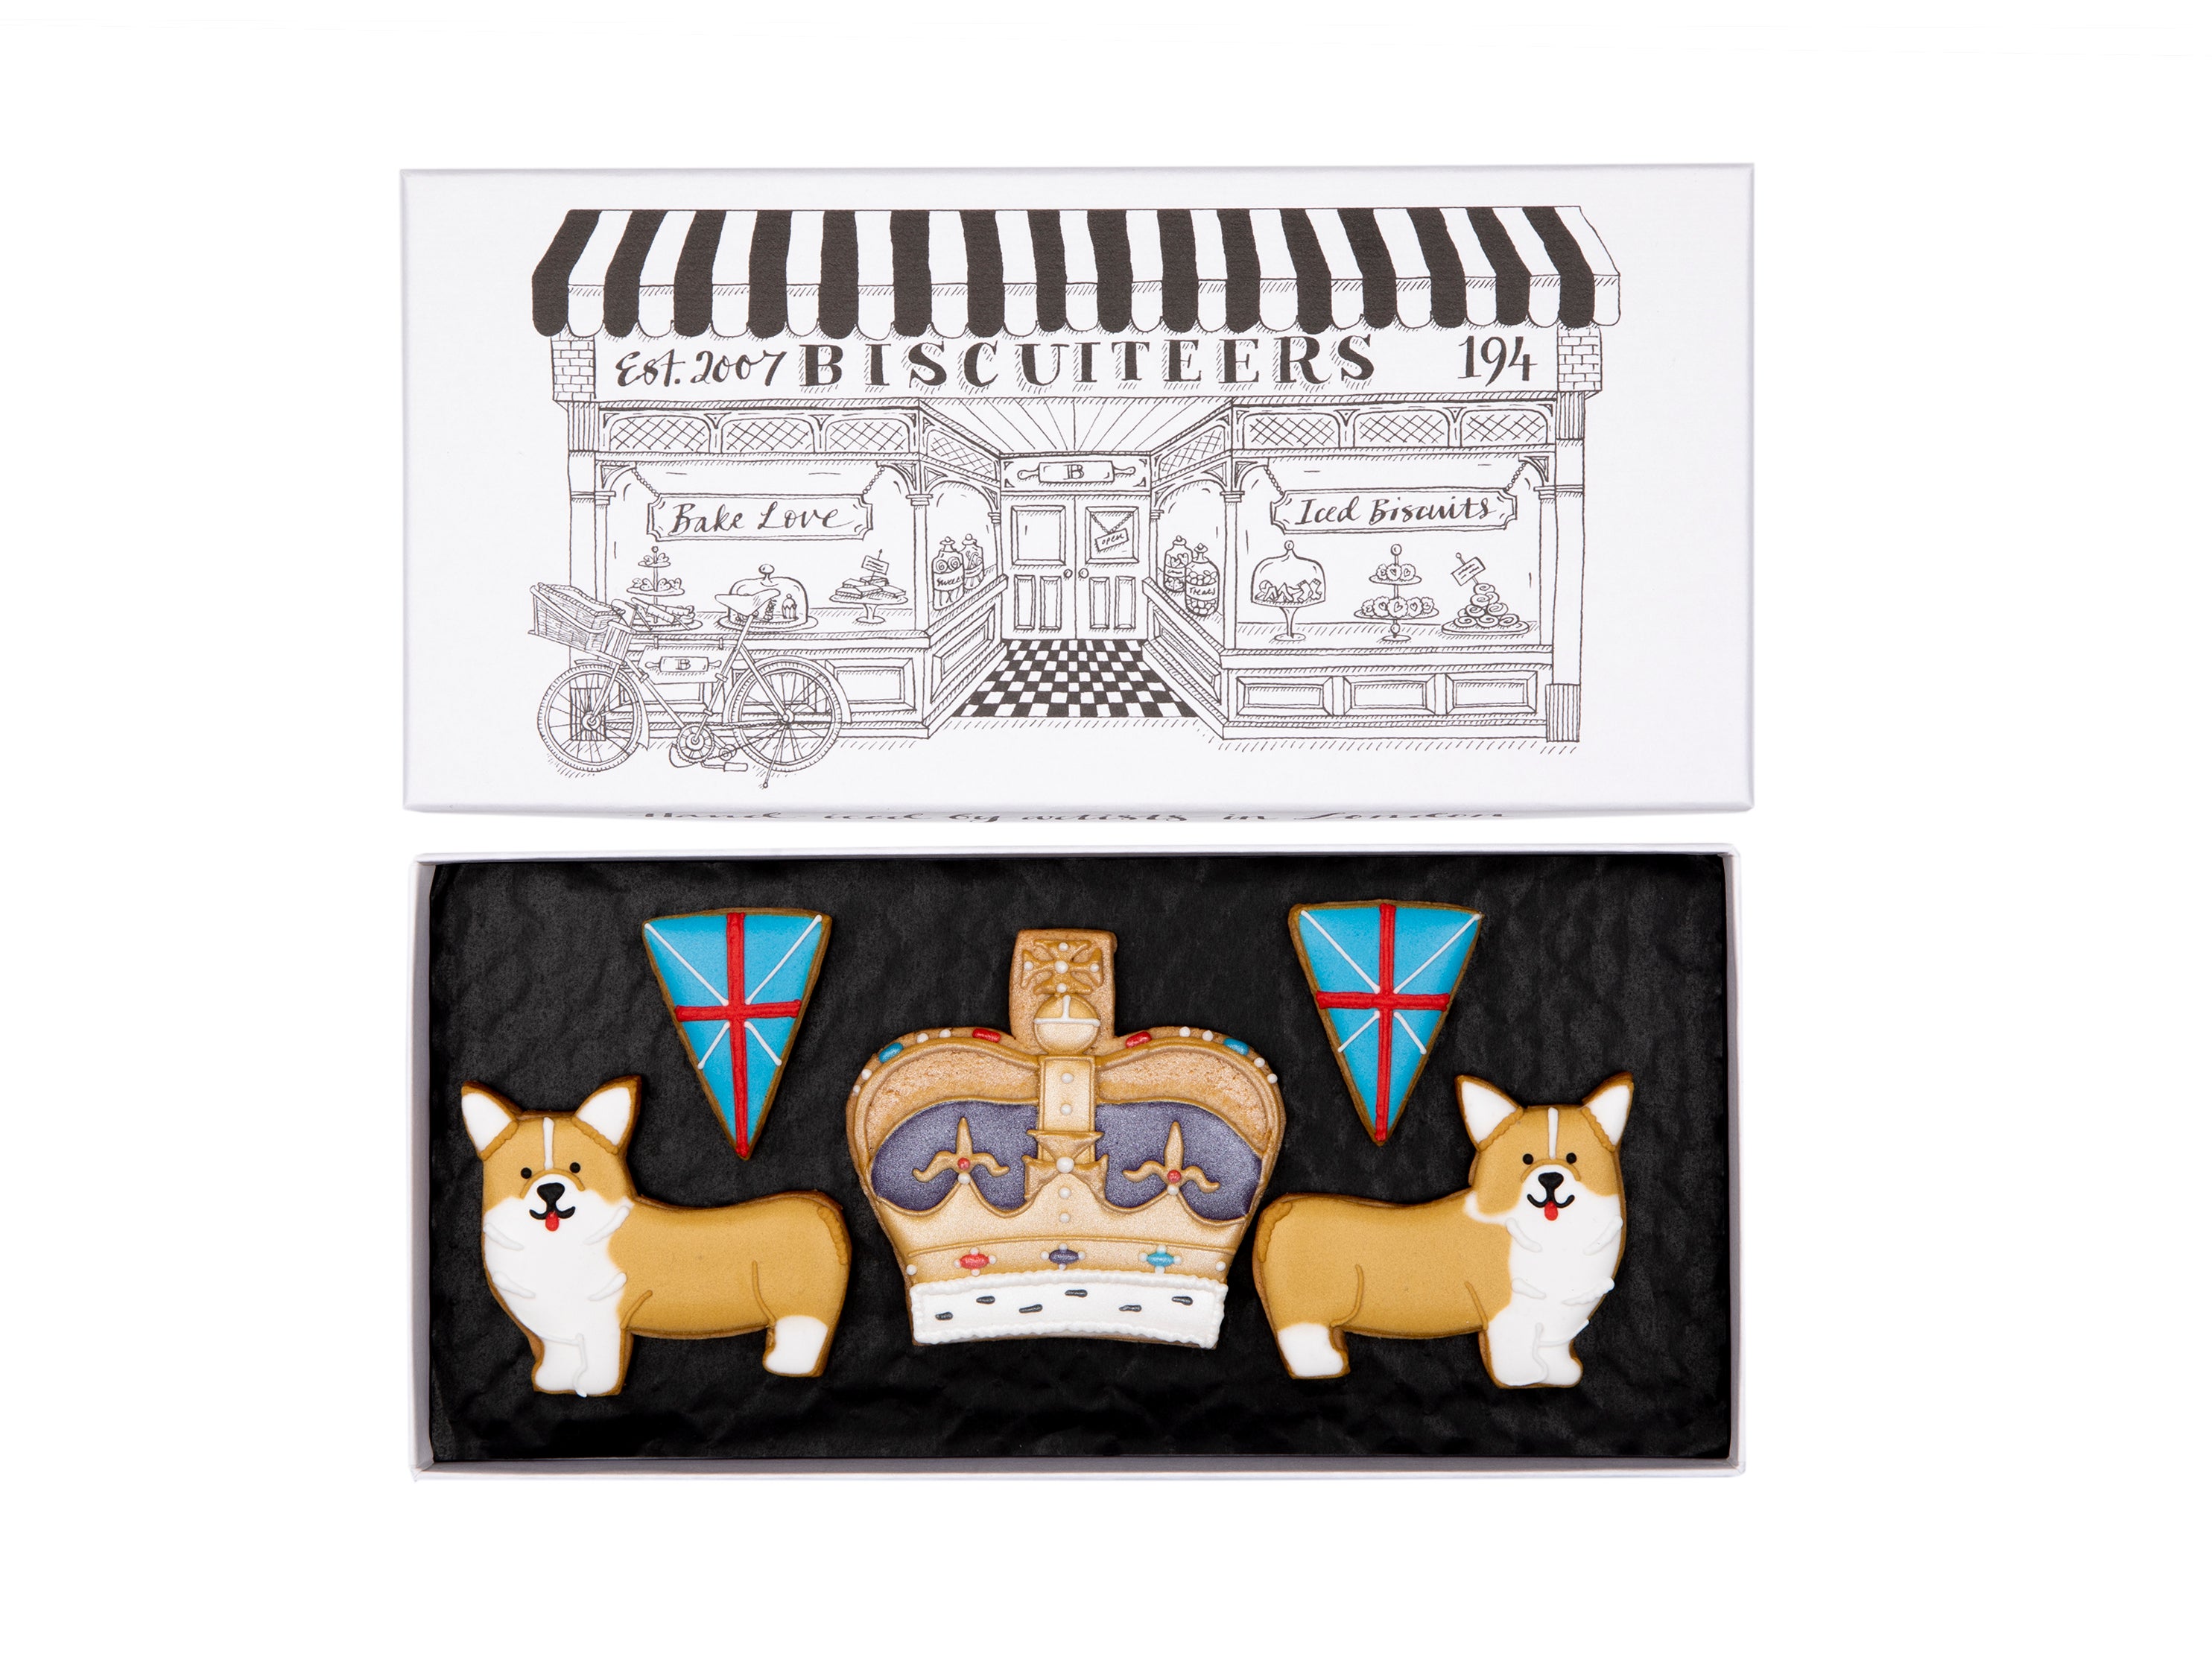 The Biscuiteers’ The Queen’s Corgis Letterbox biscuits